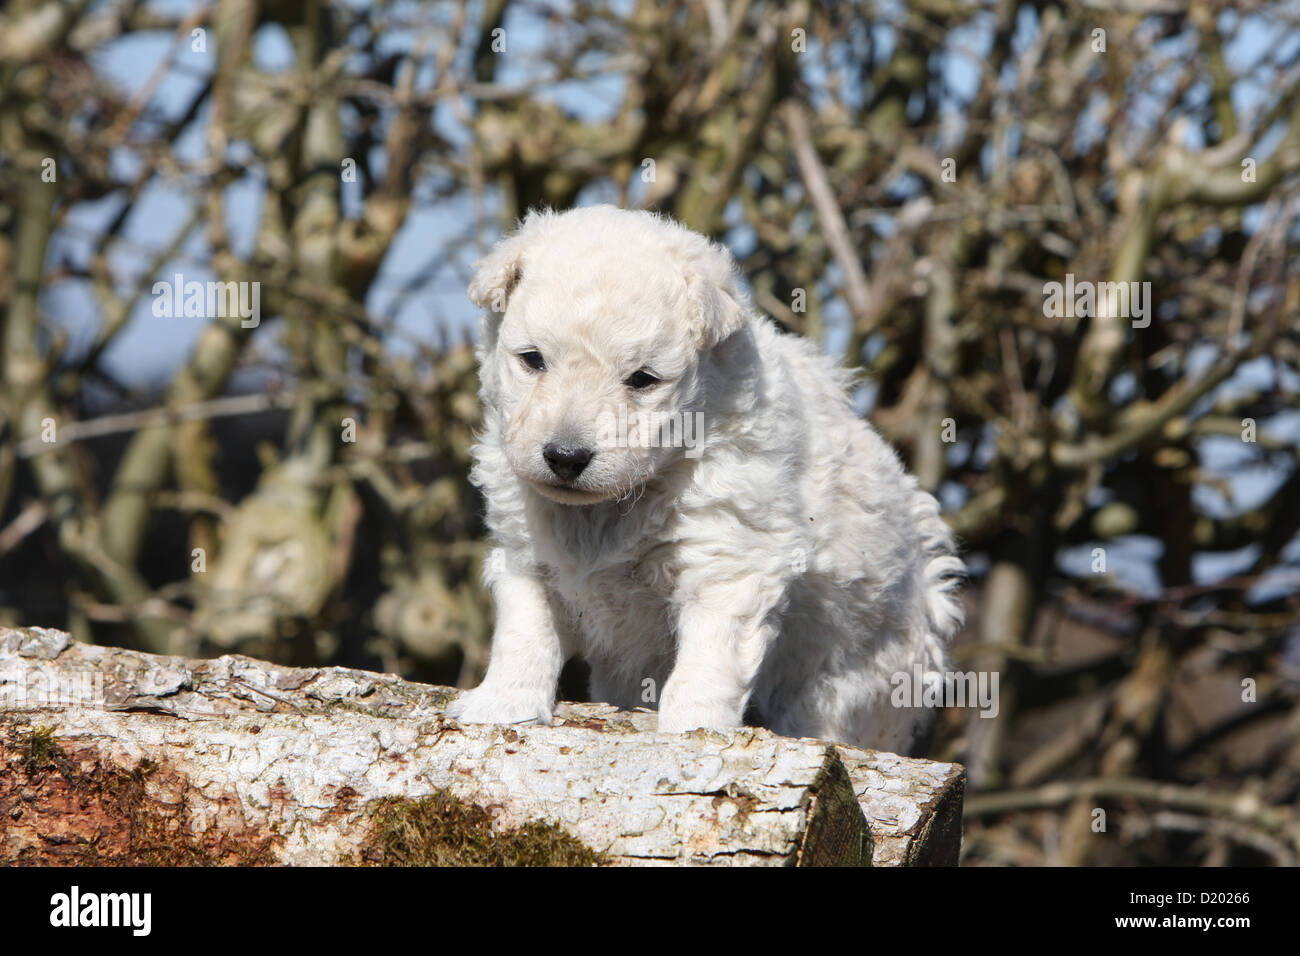 Dog Mudi (Hungarian sheepdog) puppy white sitting on a wood Stock Photo